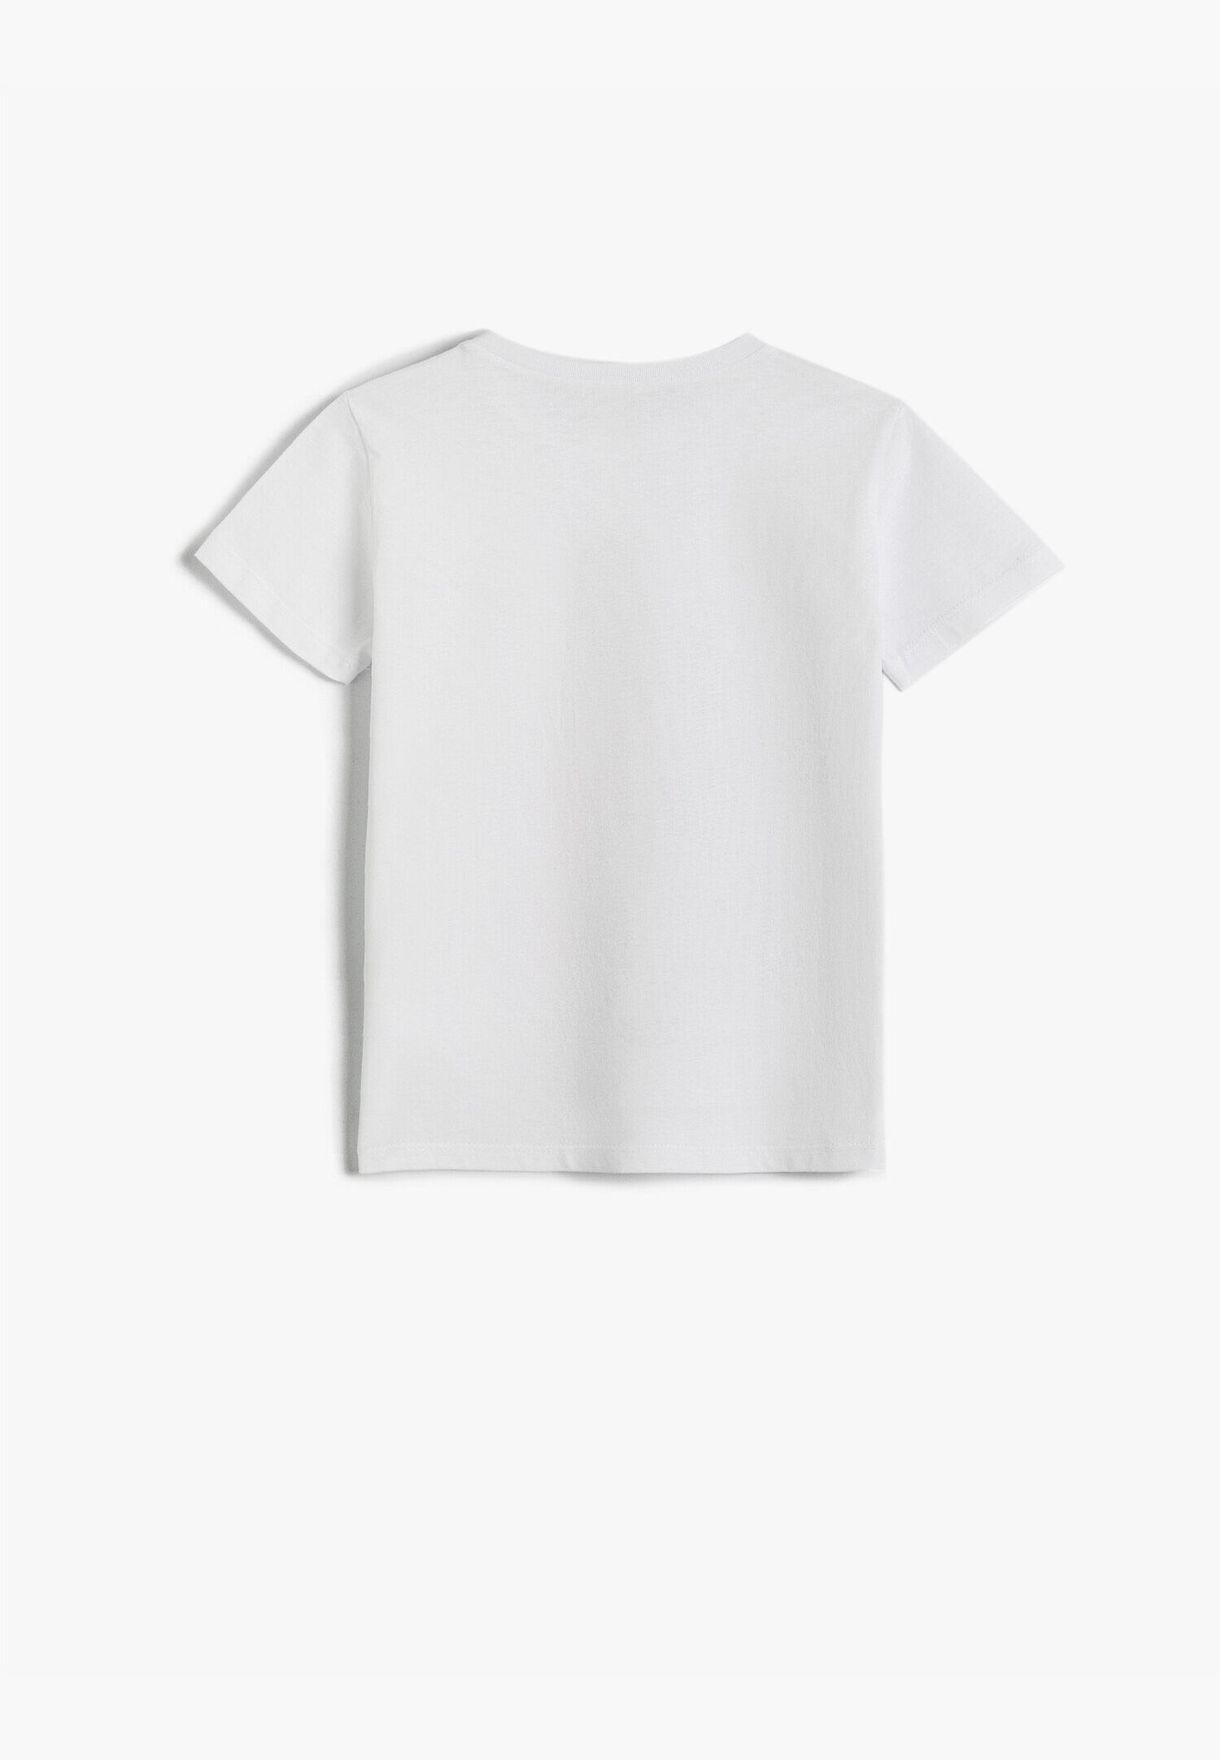 Football Hologram Short Sleeve T-Shirt Cotton